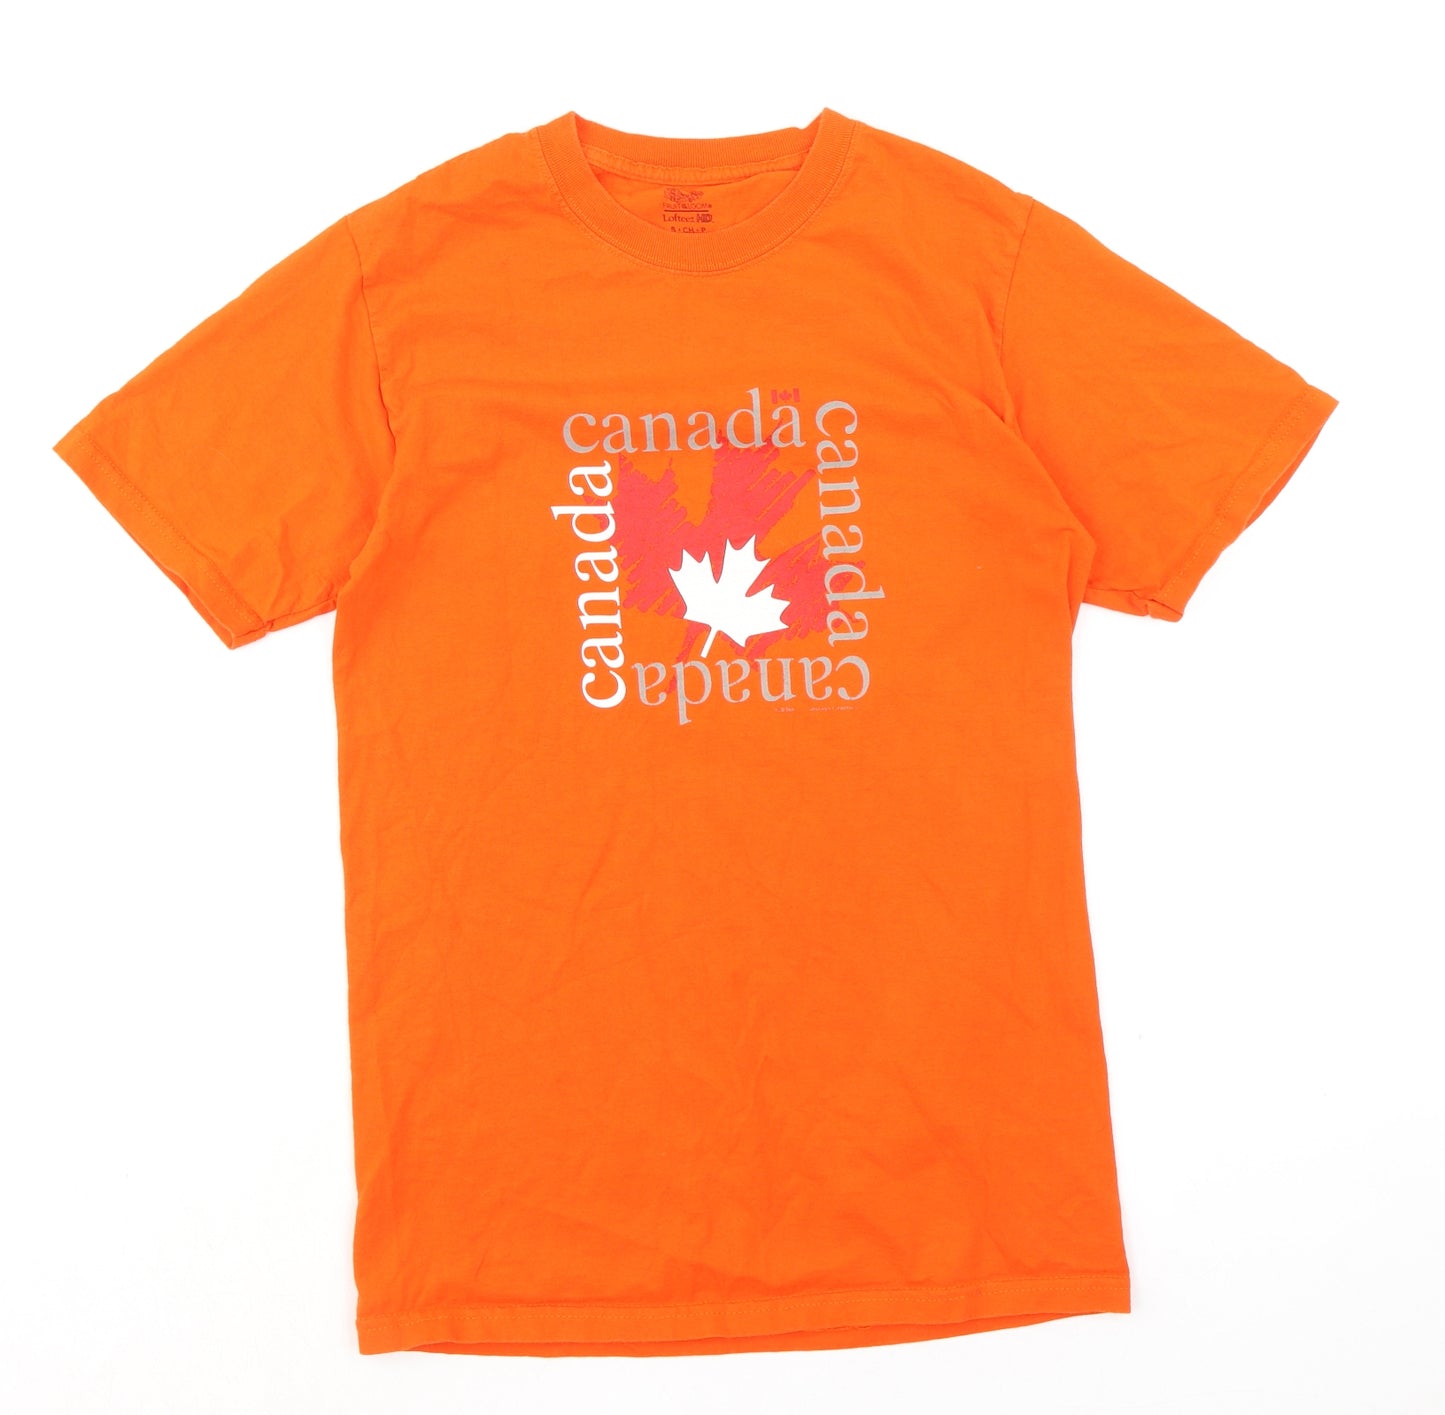 Fruit of the Loom Mens Orange Cotton T-Shirt Size S Crew Neck - Canada